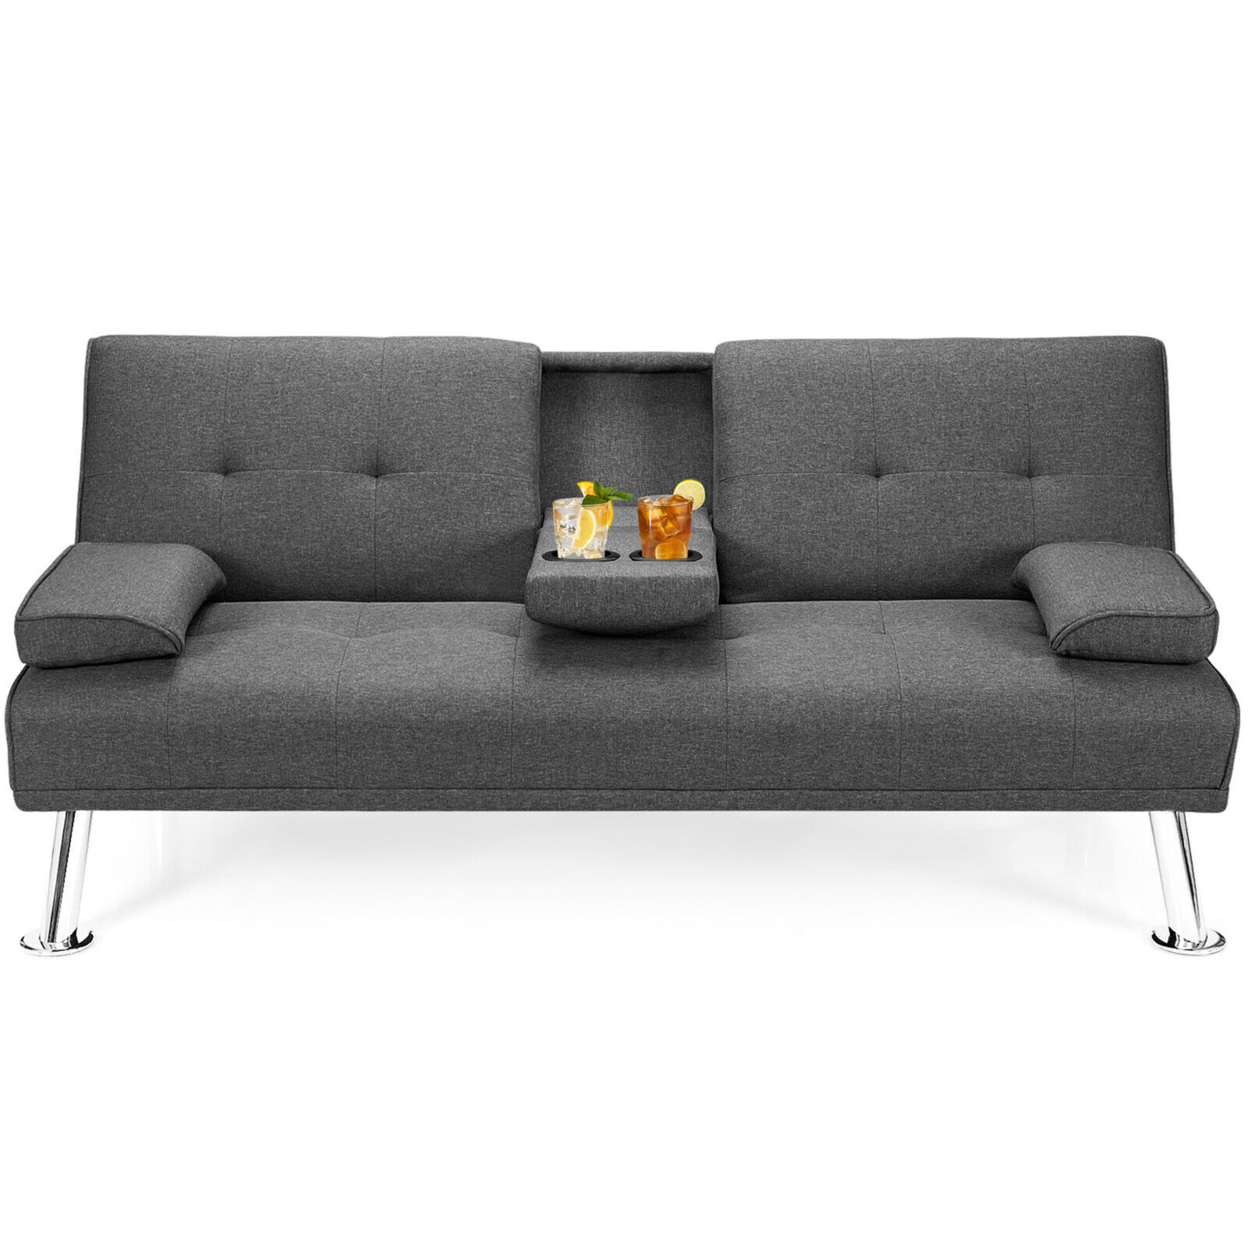 Fabric Folding Convertible Futon Sofa Bed With 2 Cup Holders Dark/Light Gray - Dark Gray